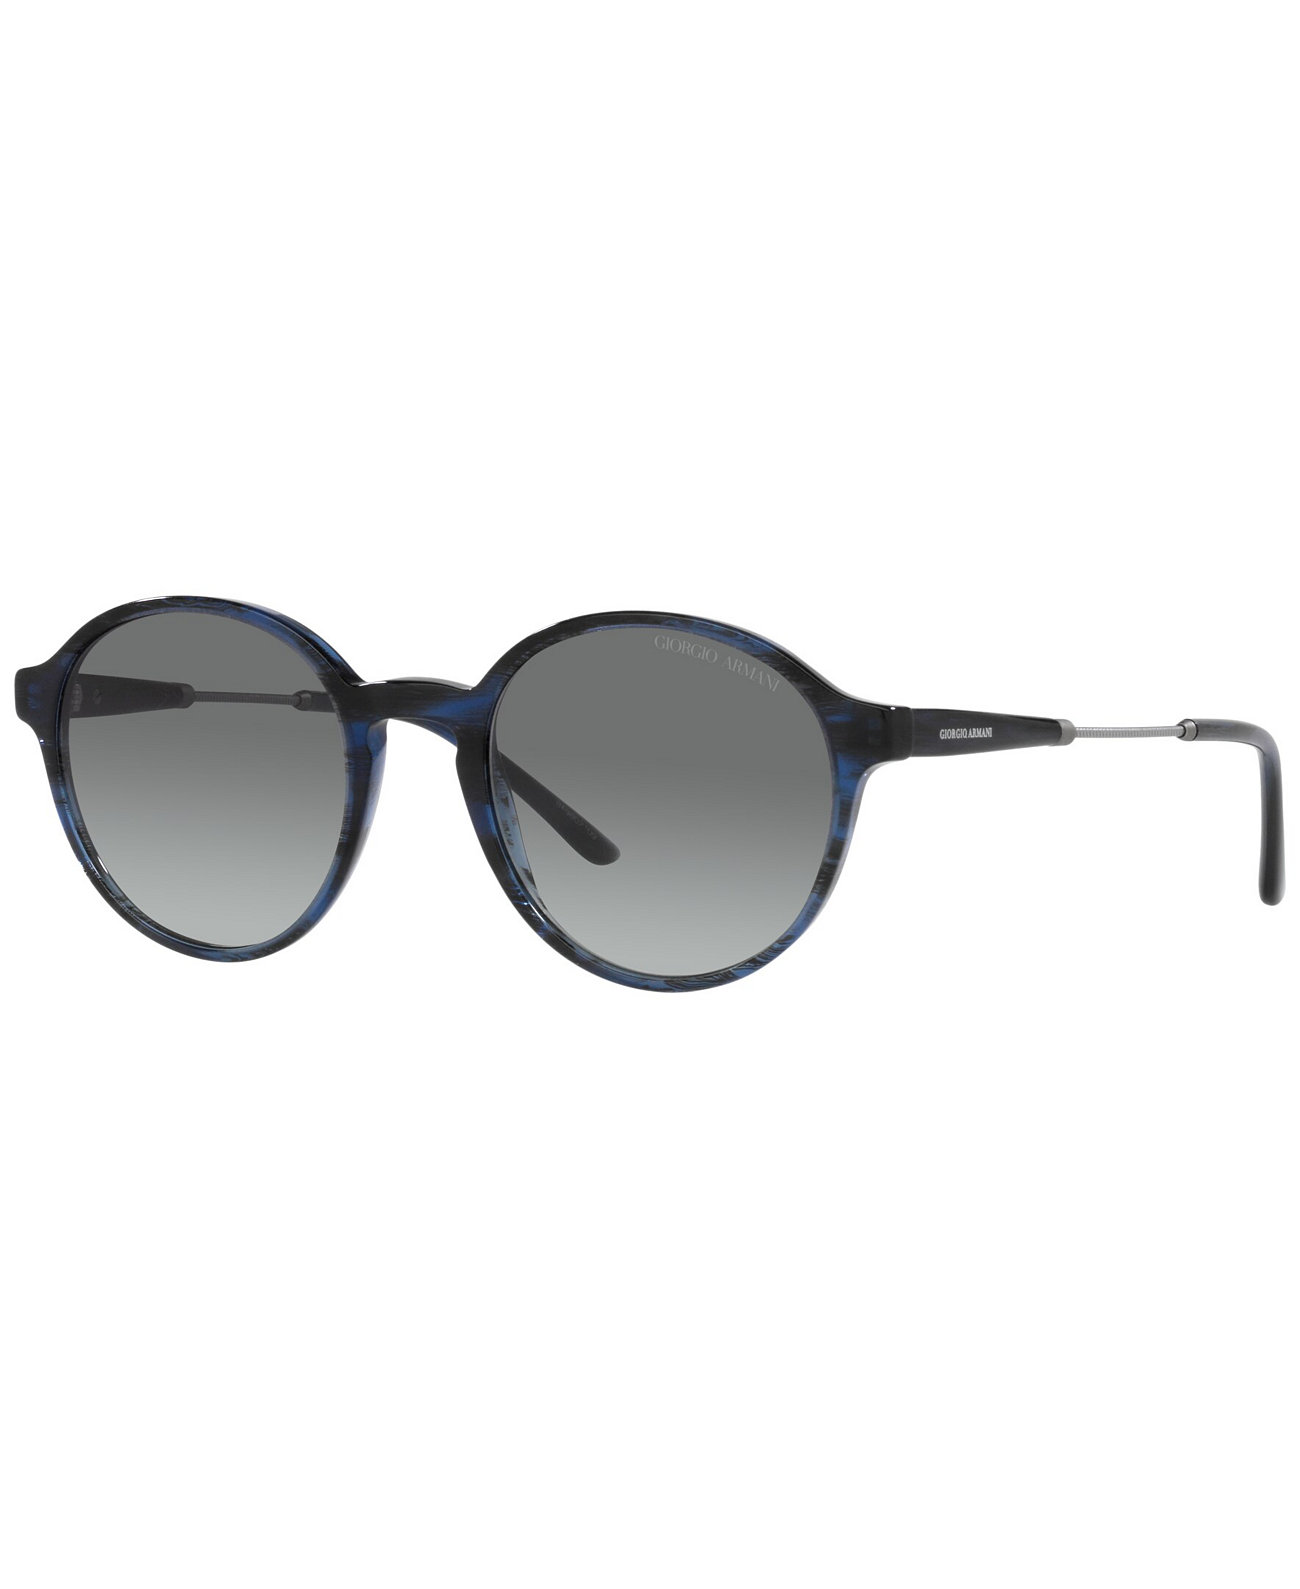 Мужские солнцезащитные очки, AR8160 51 Giorgio Armani